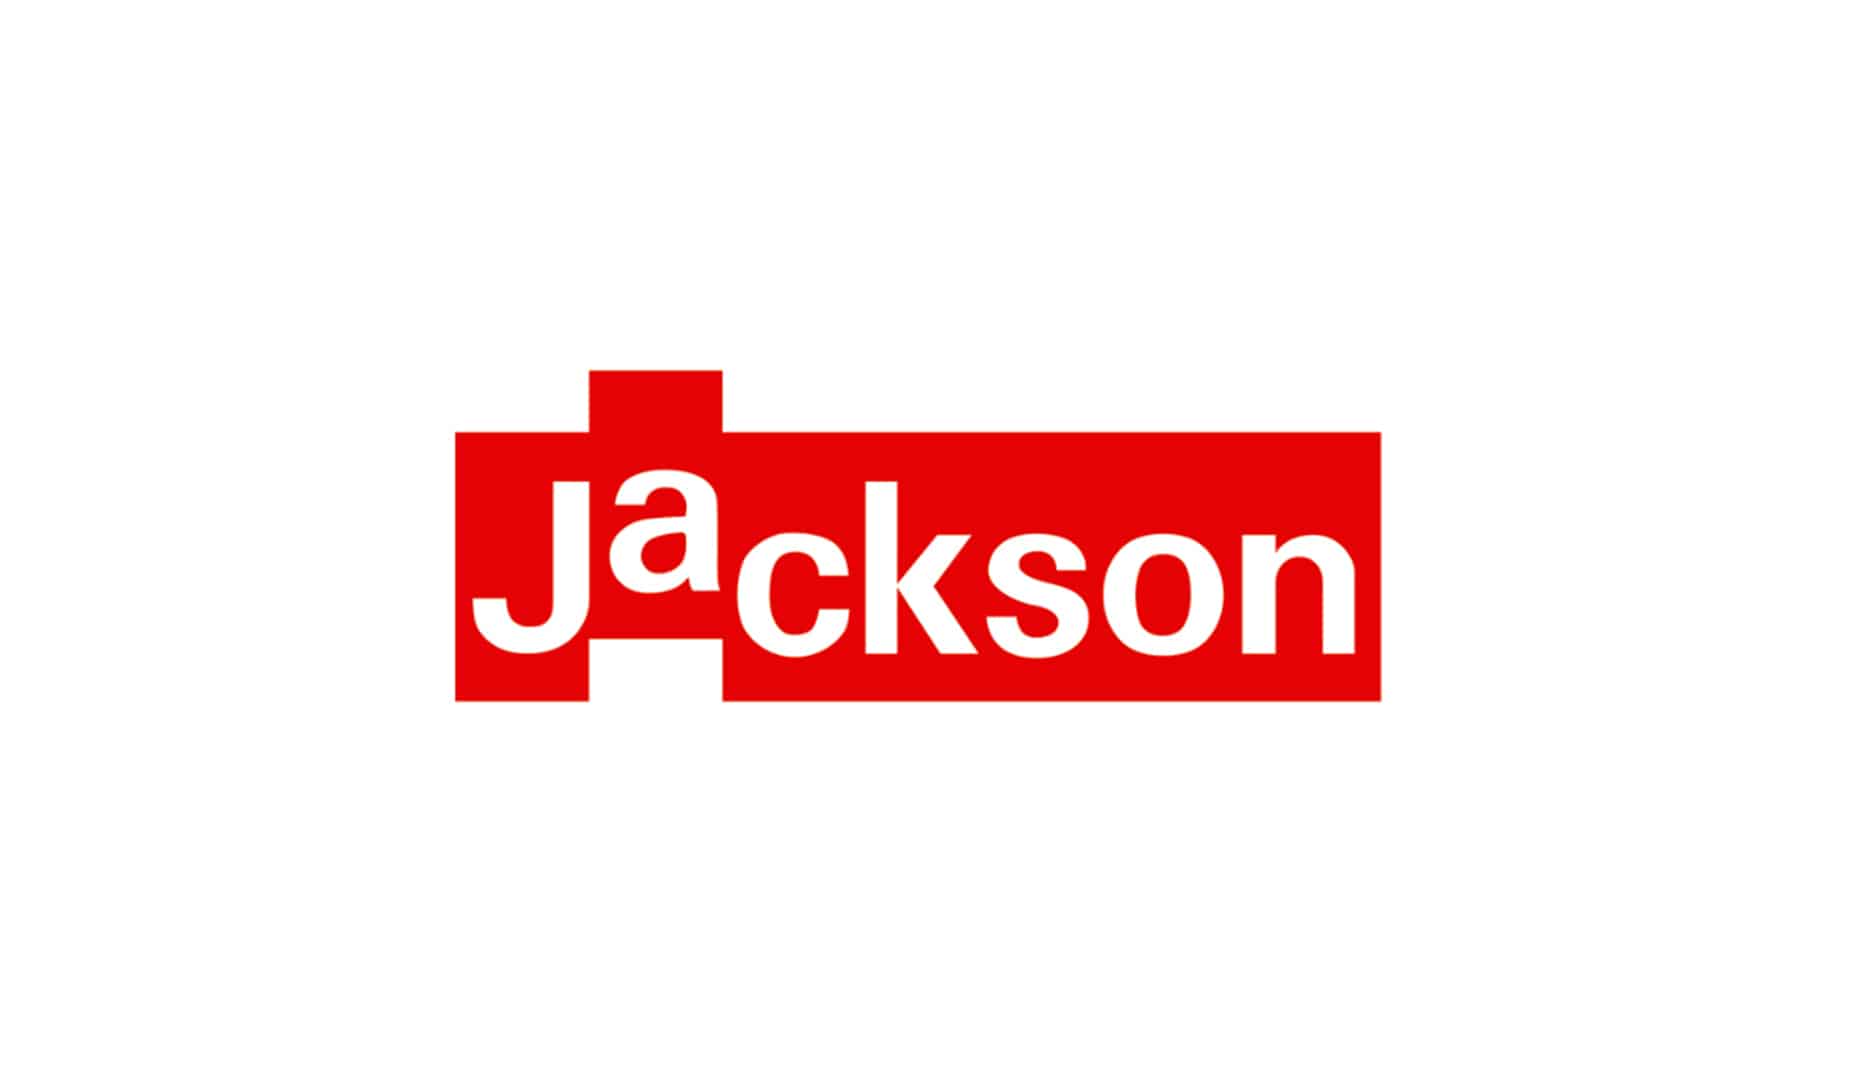 Jackson Lifts Fibre Optic Network Servicing - PSS Installations